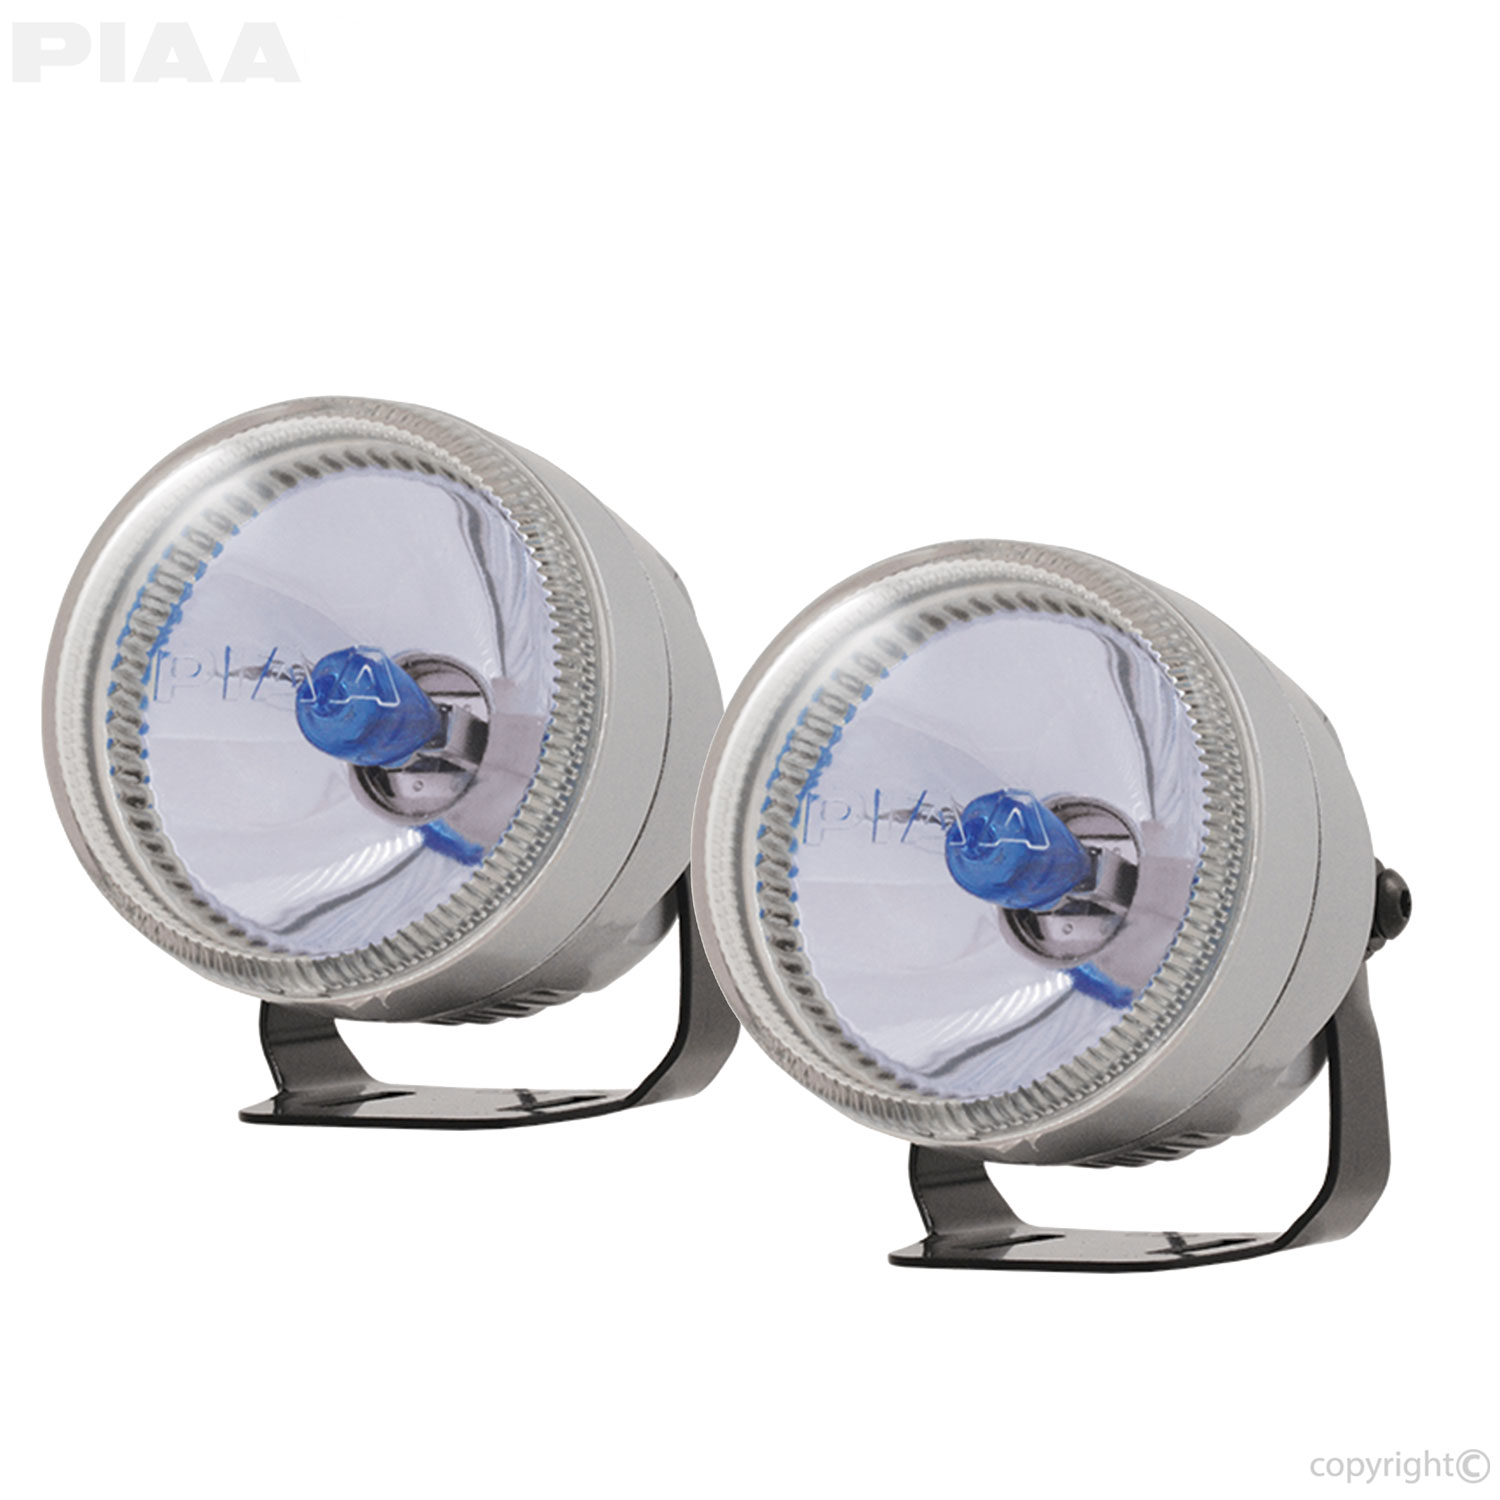 PIAA  H4 XTreme White Plus Twin Pack Halogen Bulbs #15224